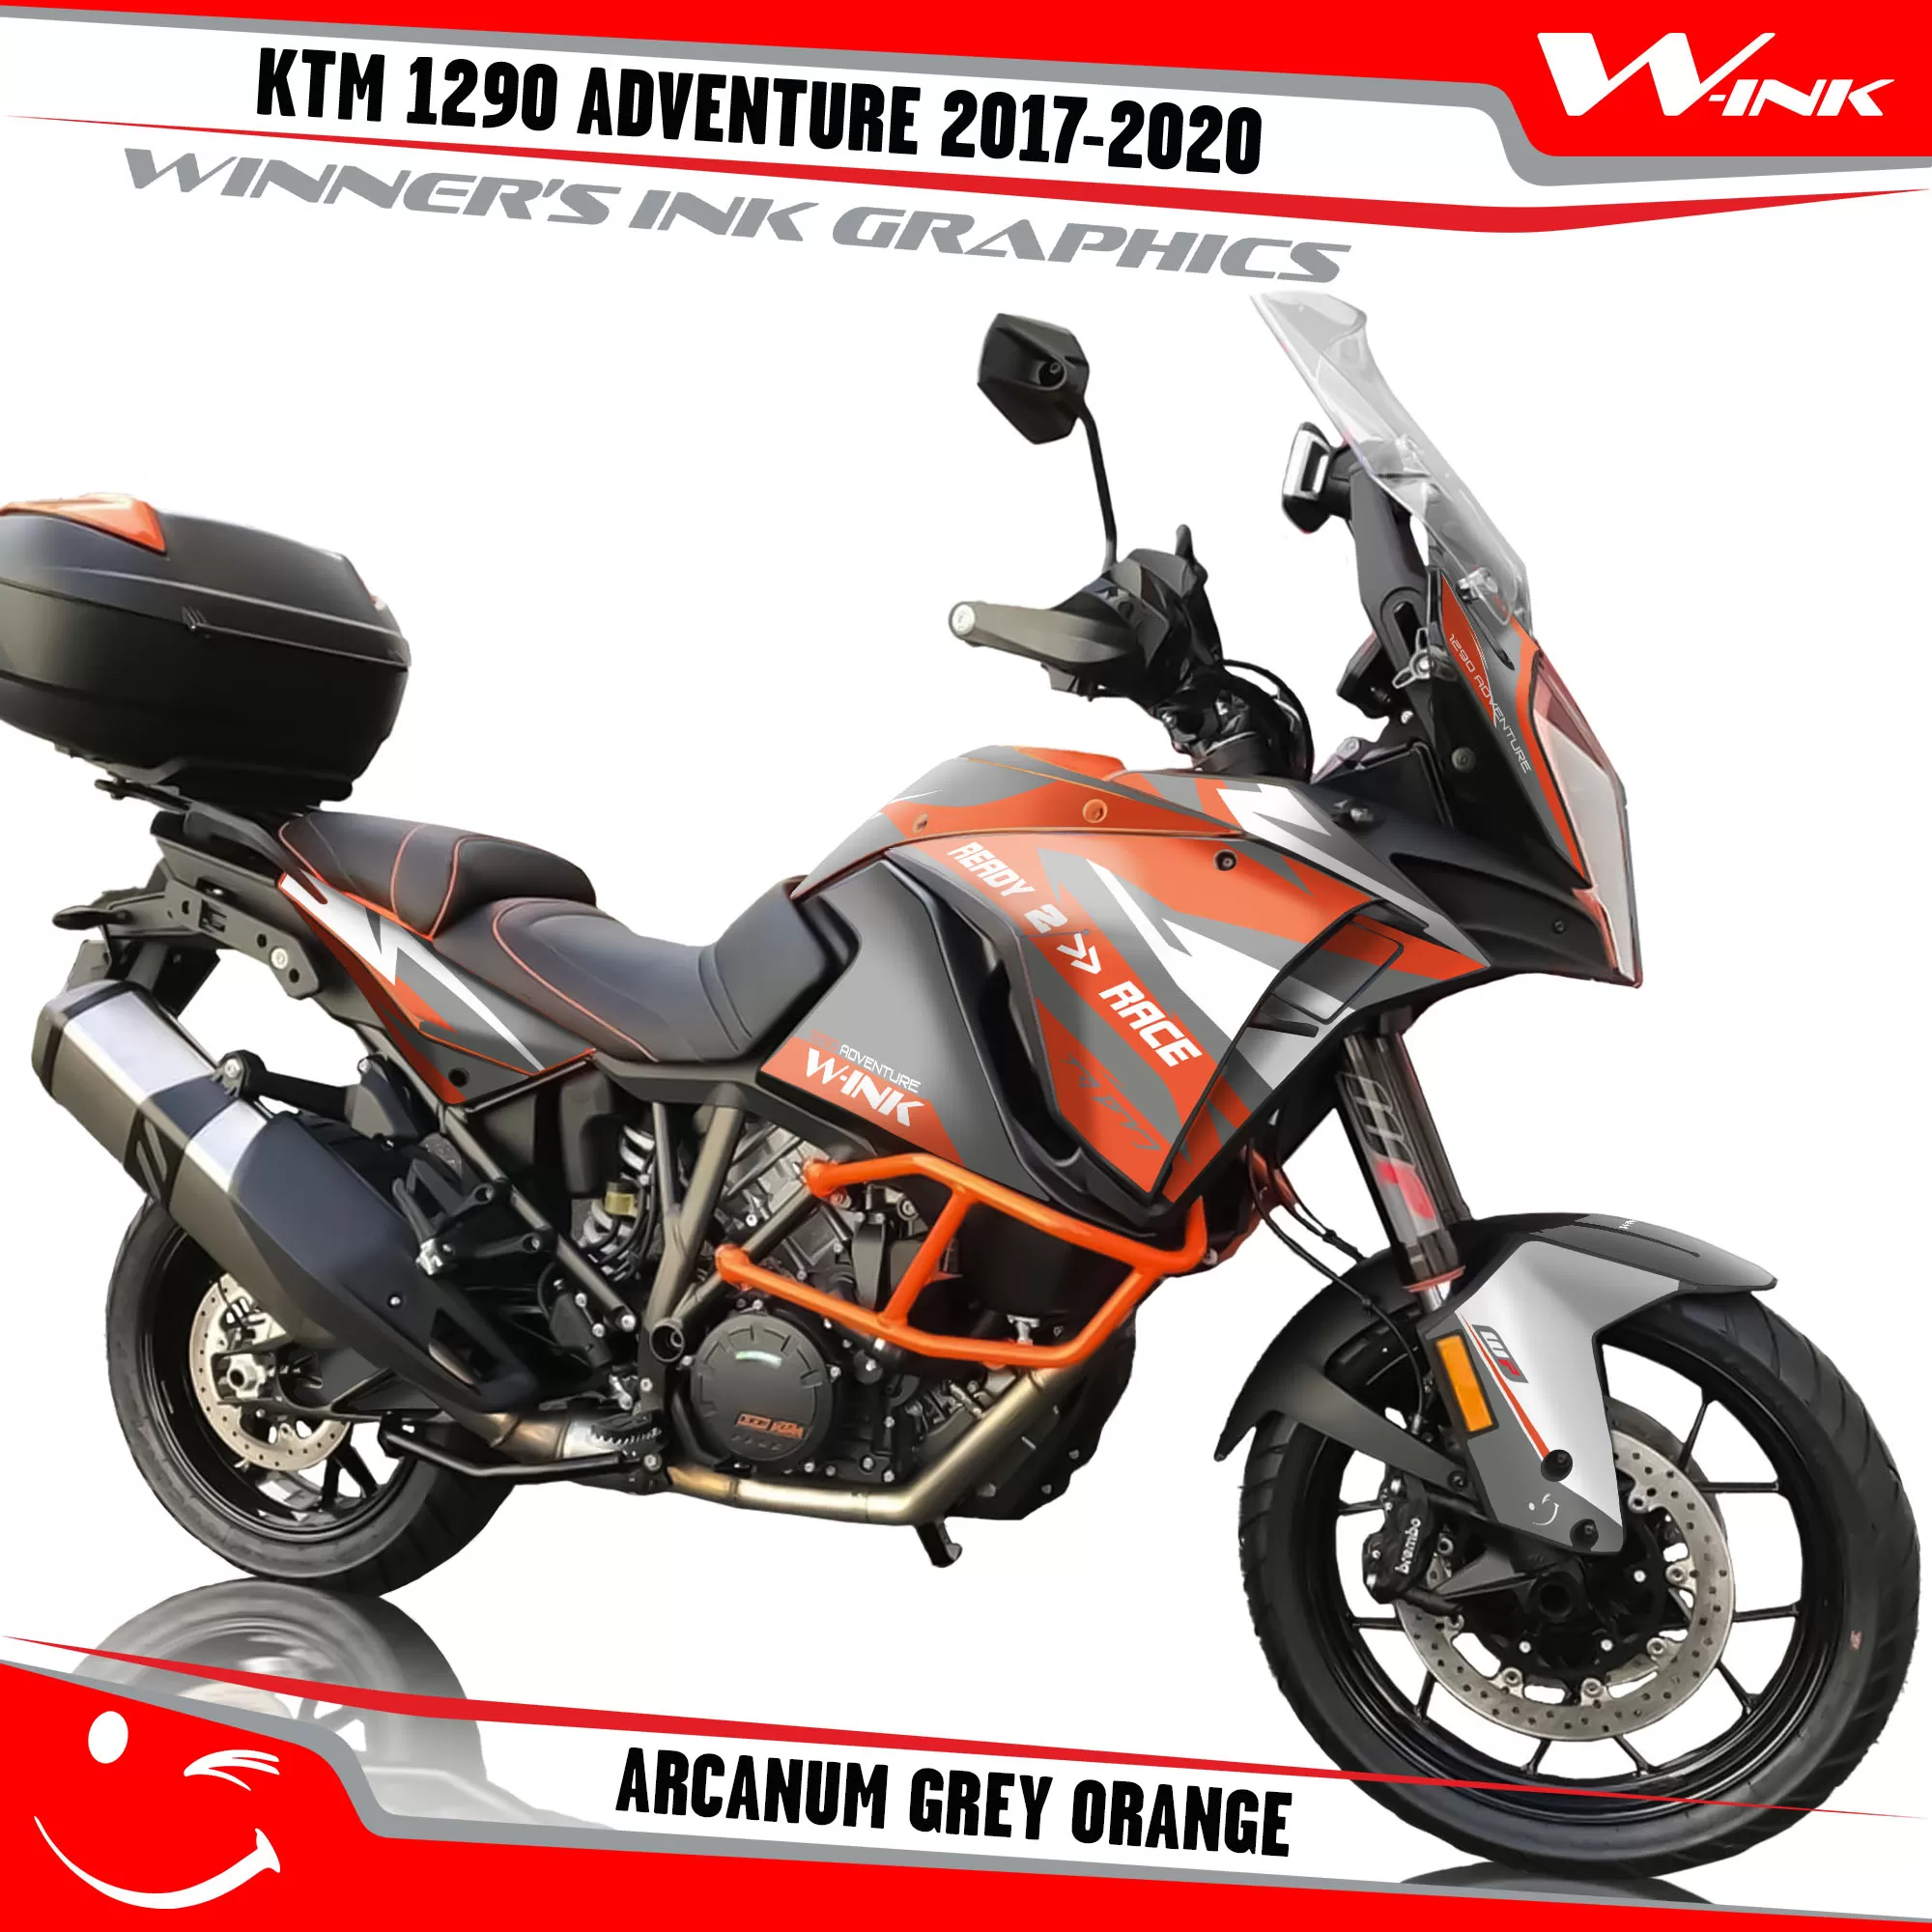 KTM-Adventure-1290-2017-2018-2019-2020-graphics-kit-and-decals-Arcanum-Grey-Orange